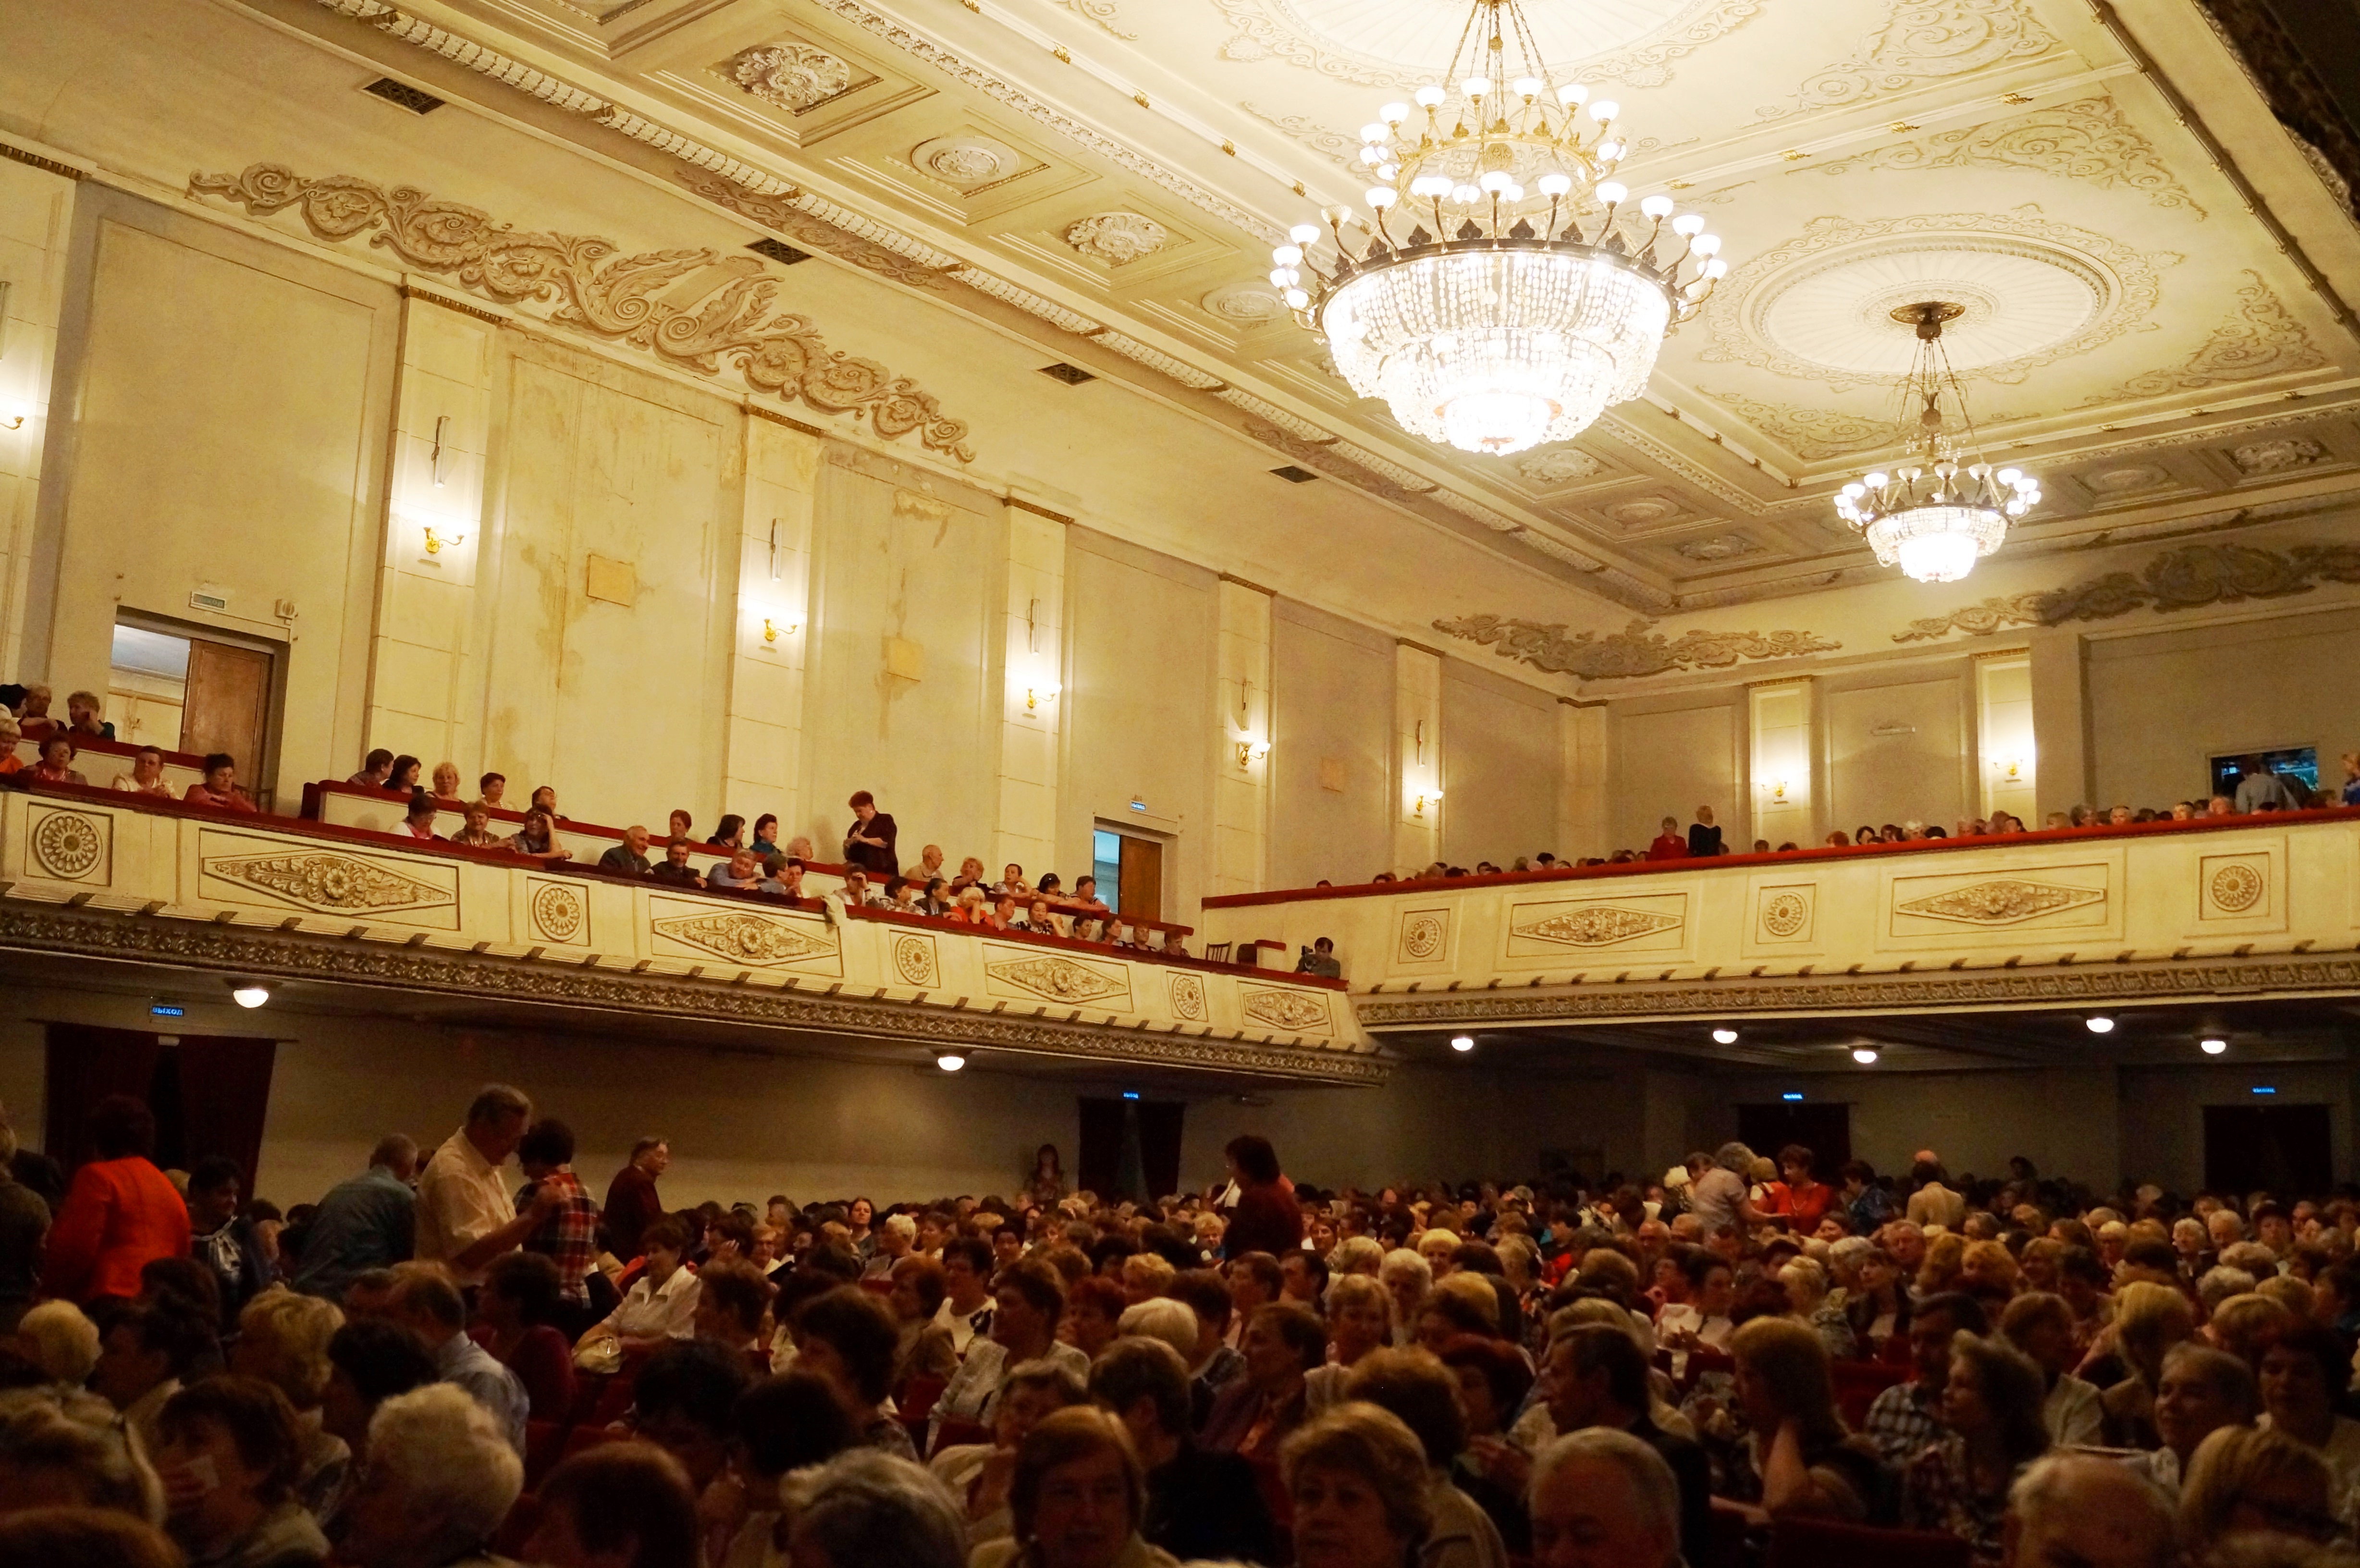 Театр имени пушкина фото зрительного зала